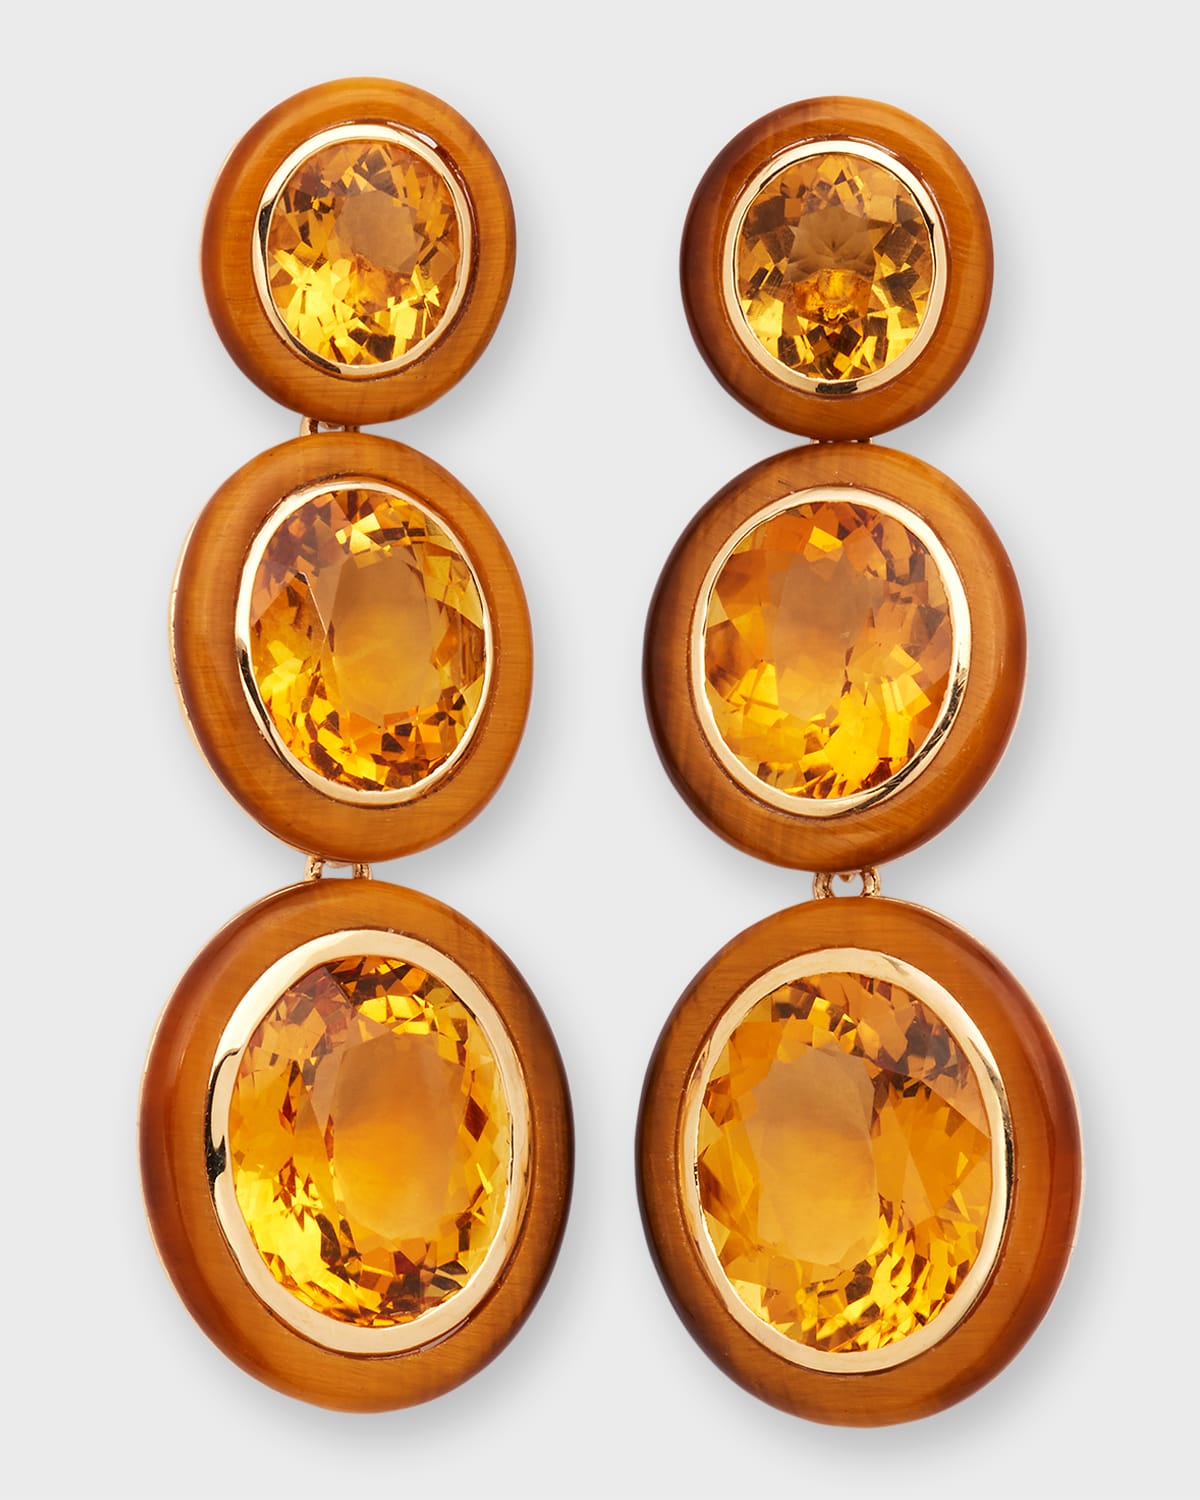 Goshwara Melange 3-Tier Oval Earrings in 18k Gold with Citrine & Tiger's Eye